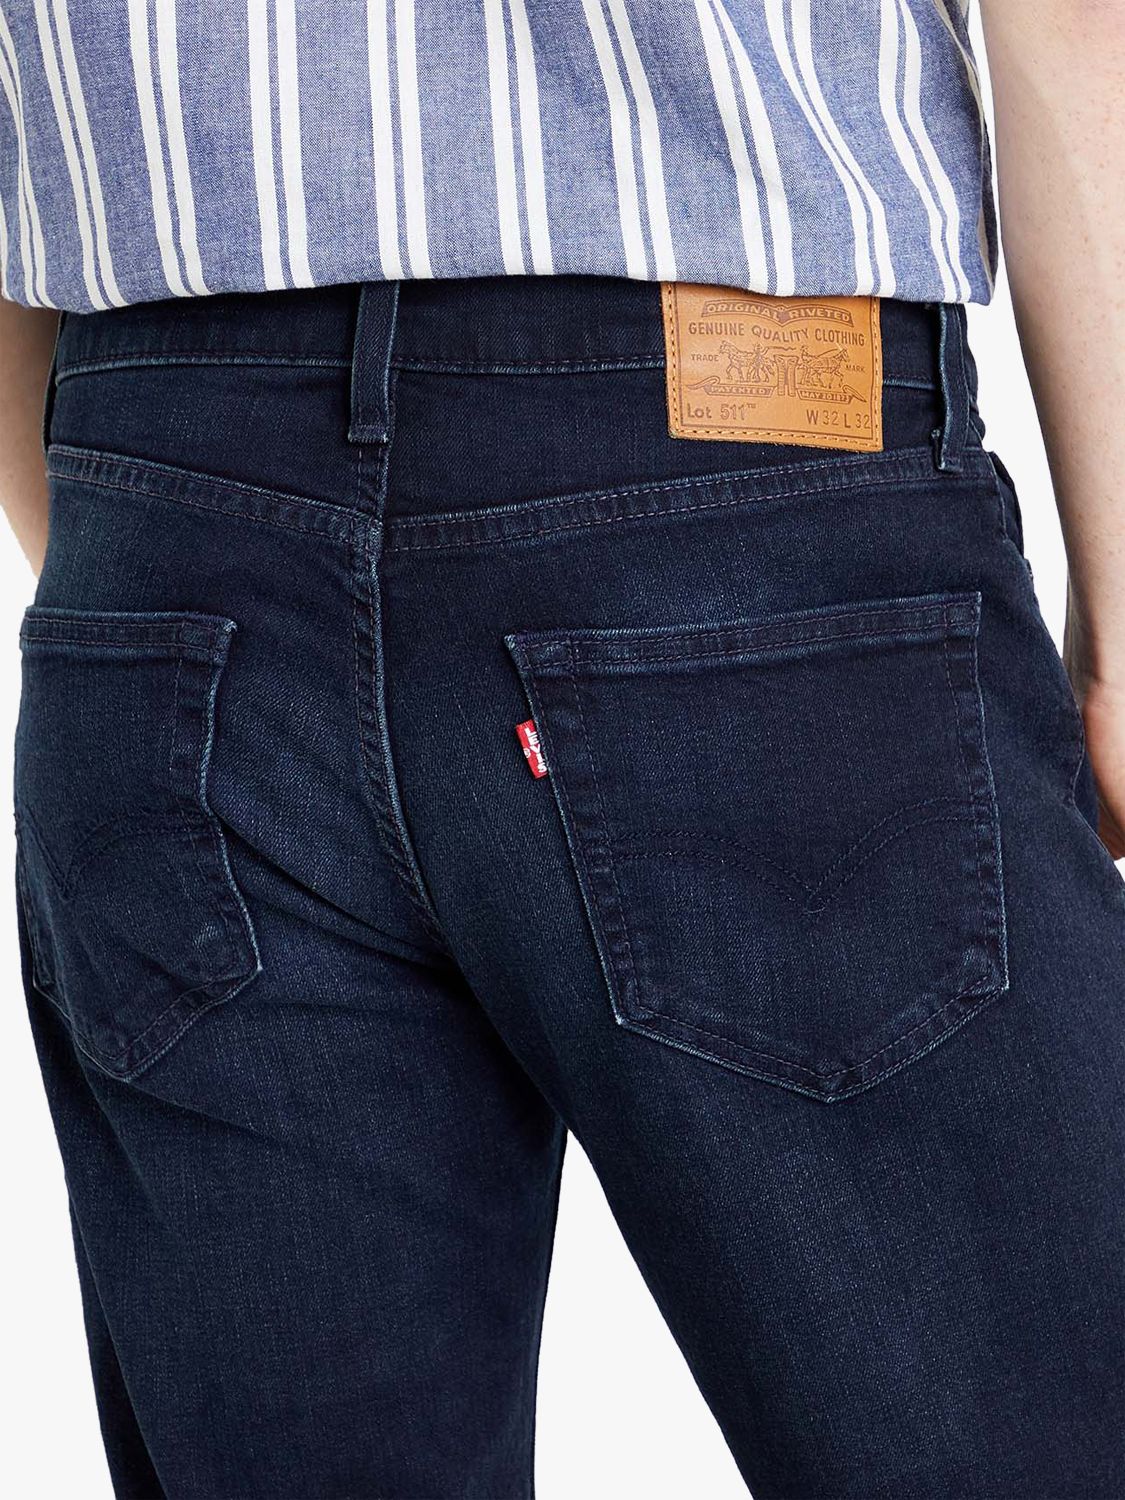 Levi's 511 Slim Fit Jeans, Blue Ridge at John Lewis & Partners